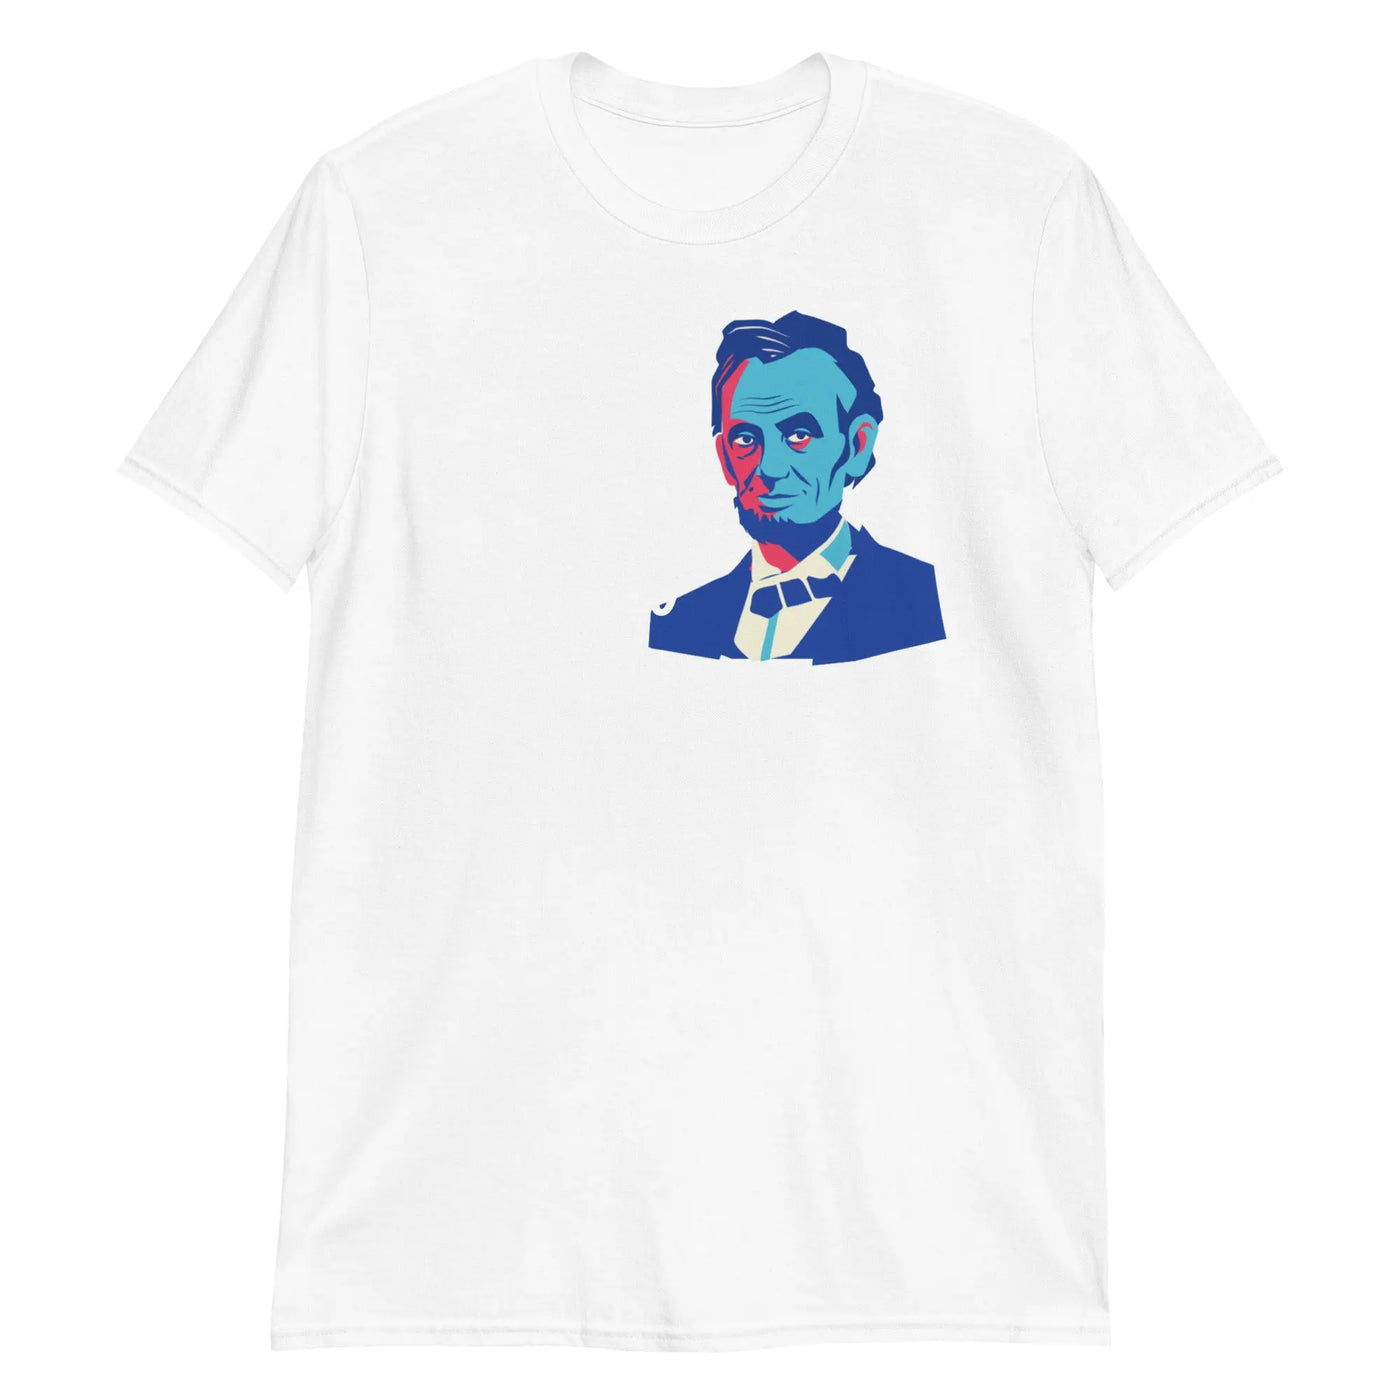 Lincoln Four Score Political T-Shirt